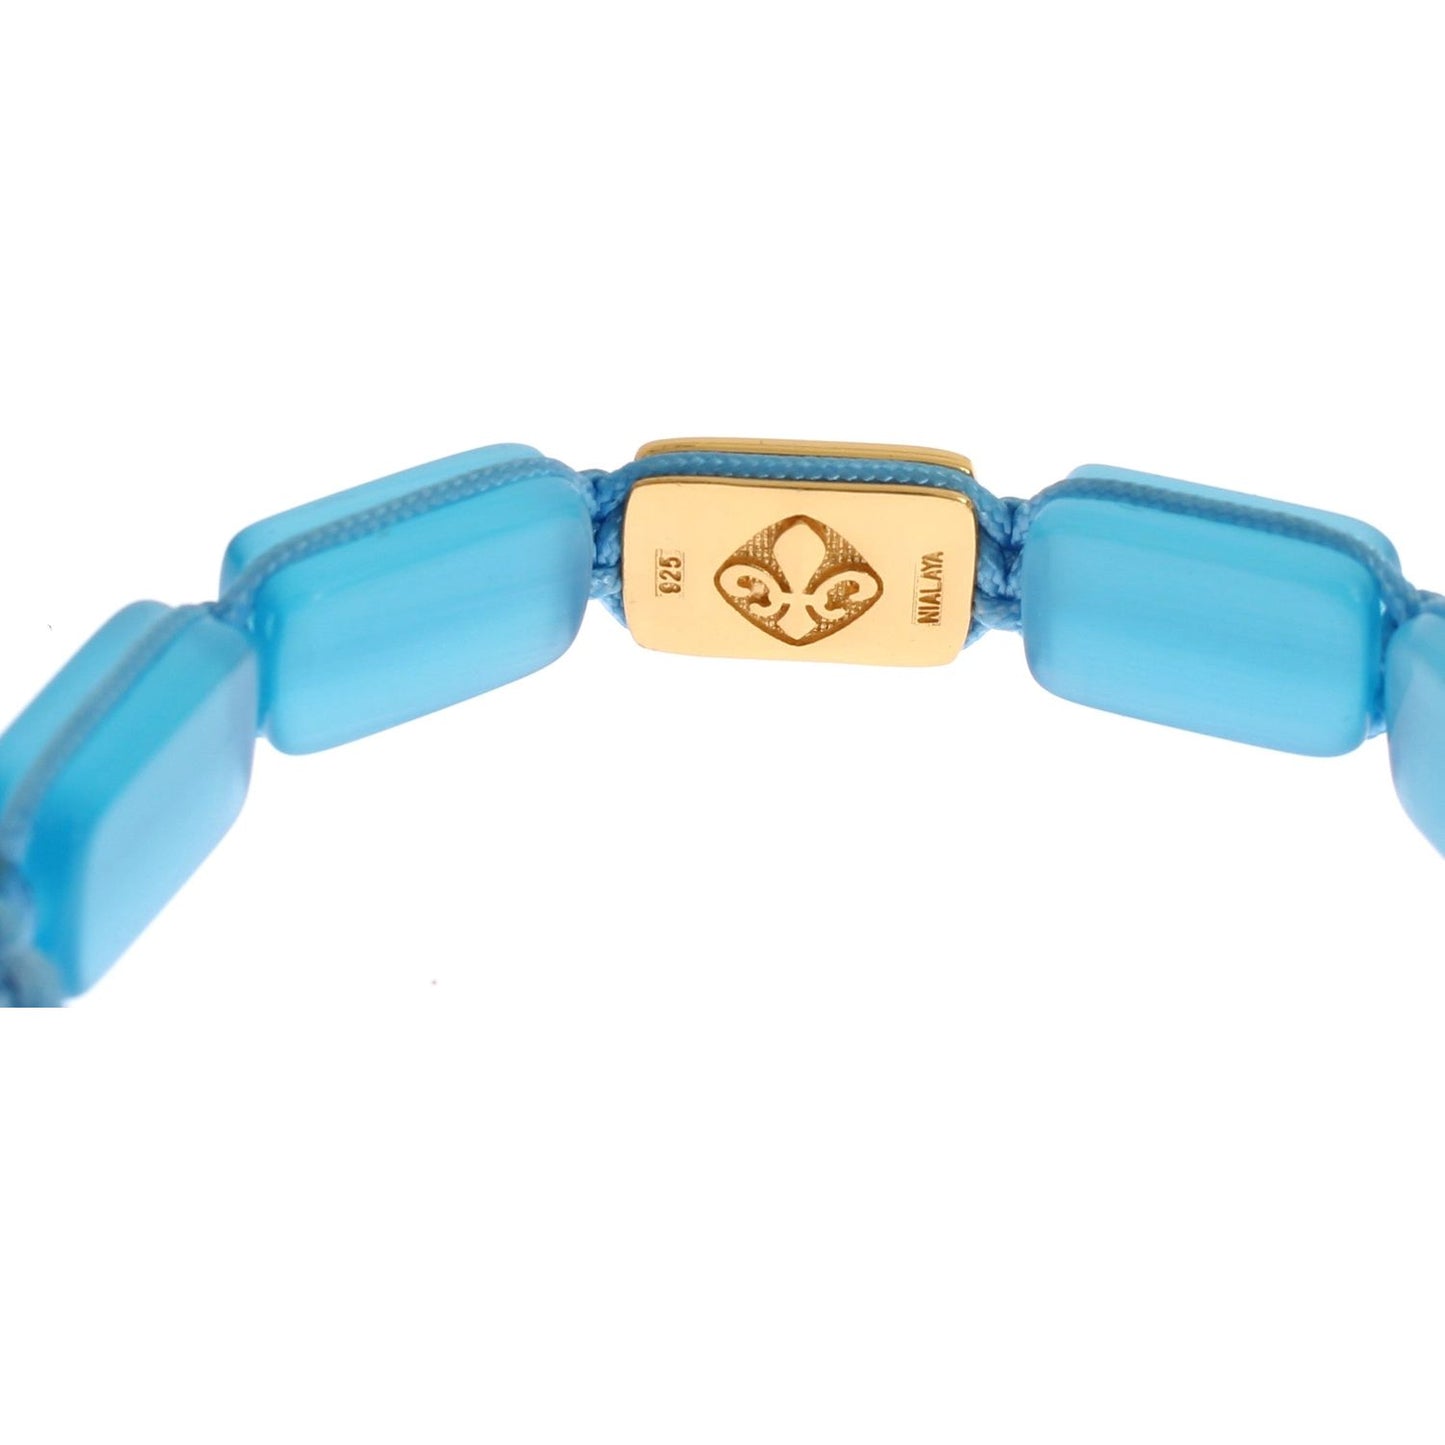 Elegant Blue Opal & Diamond-Studded Bracelet Nialaya